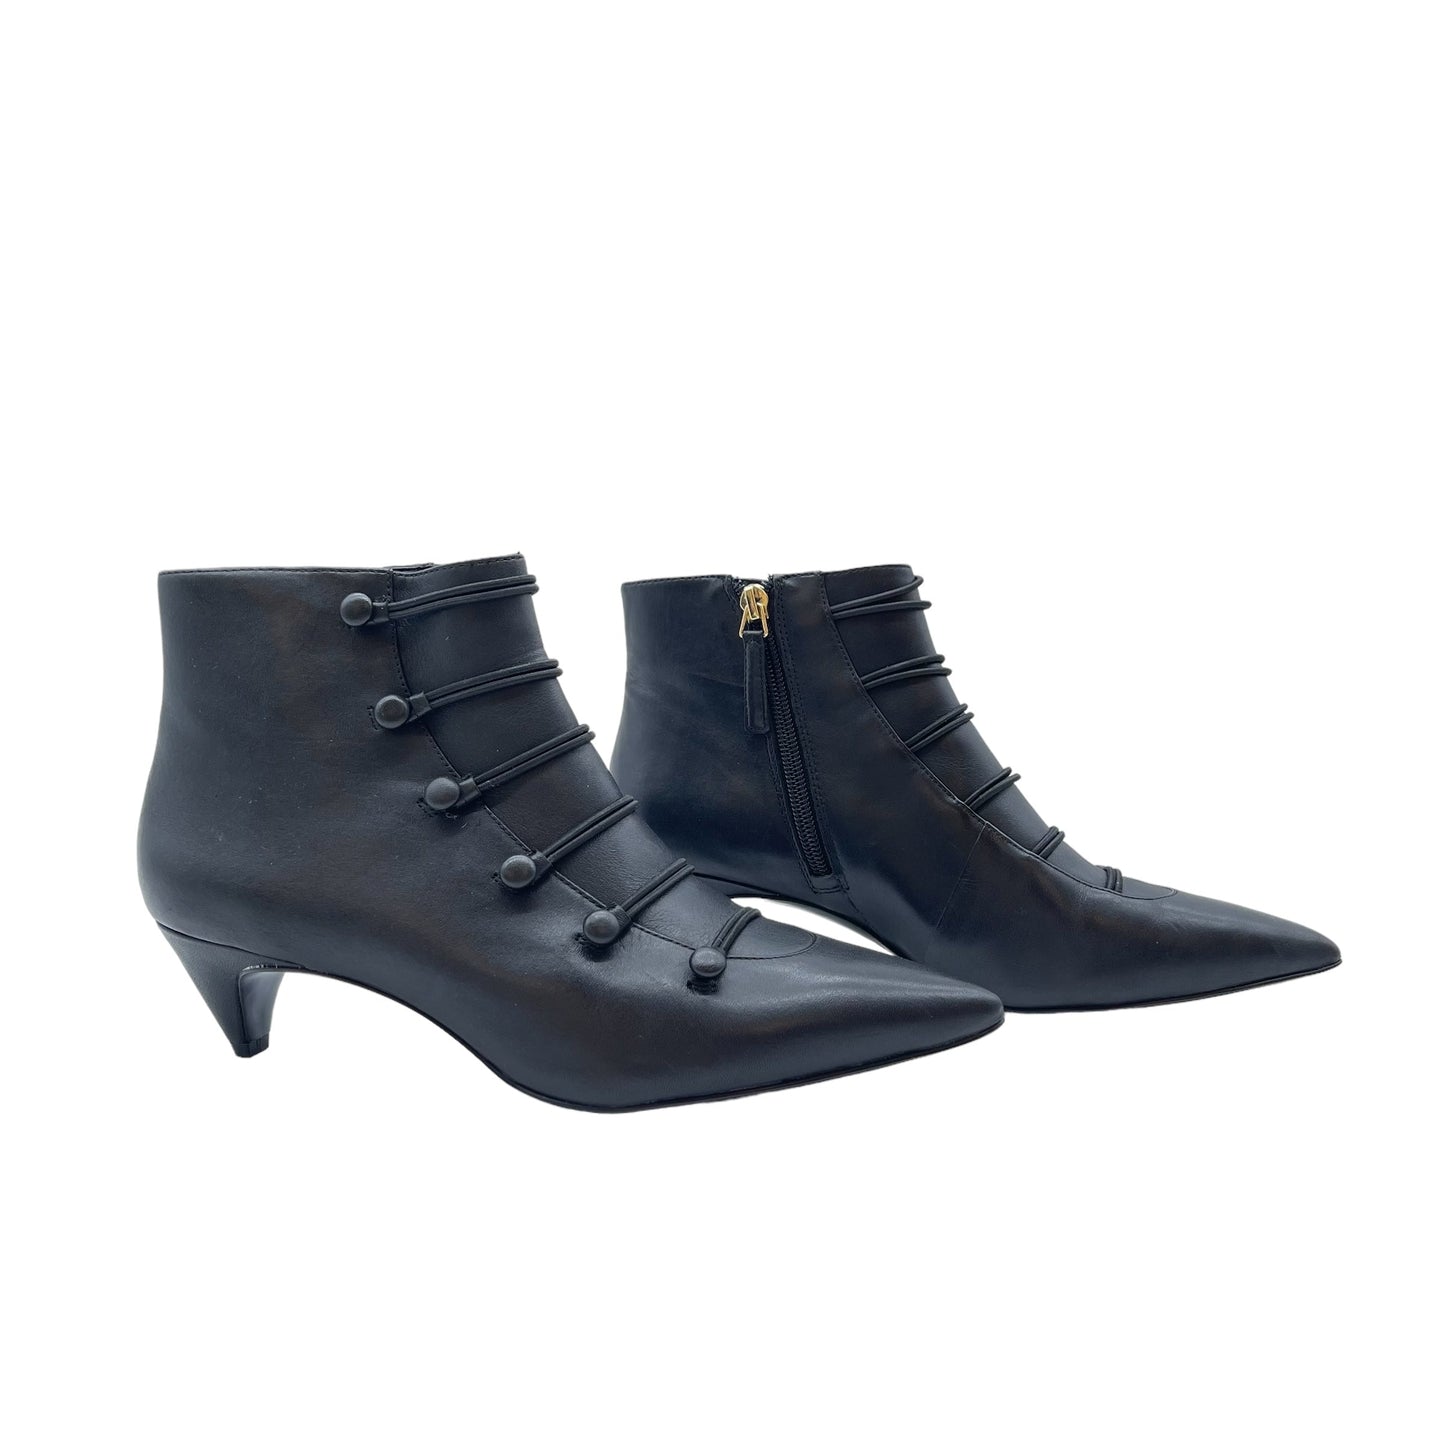 Black Boots Ankle Heels Nine West, Size 7.5